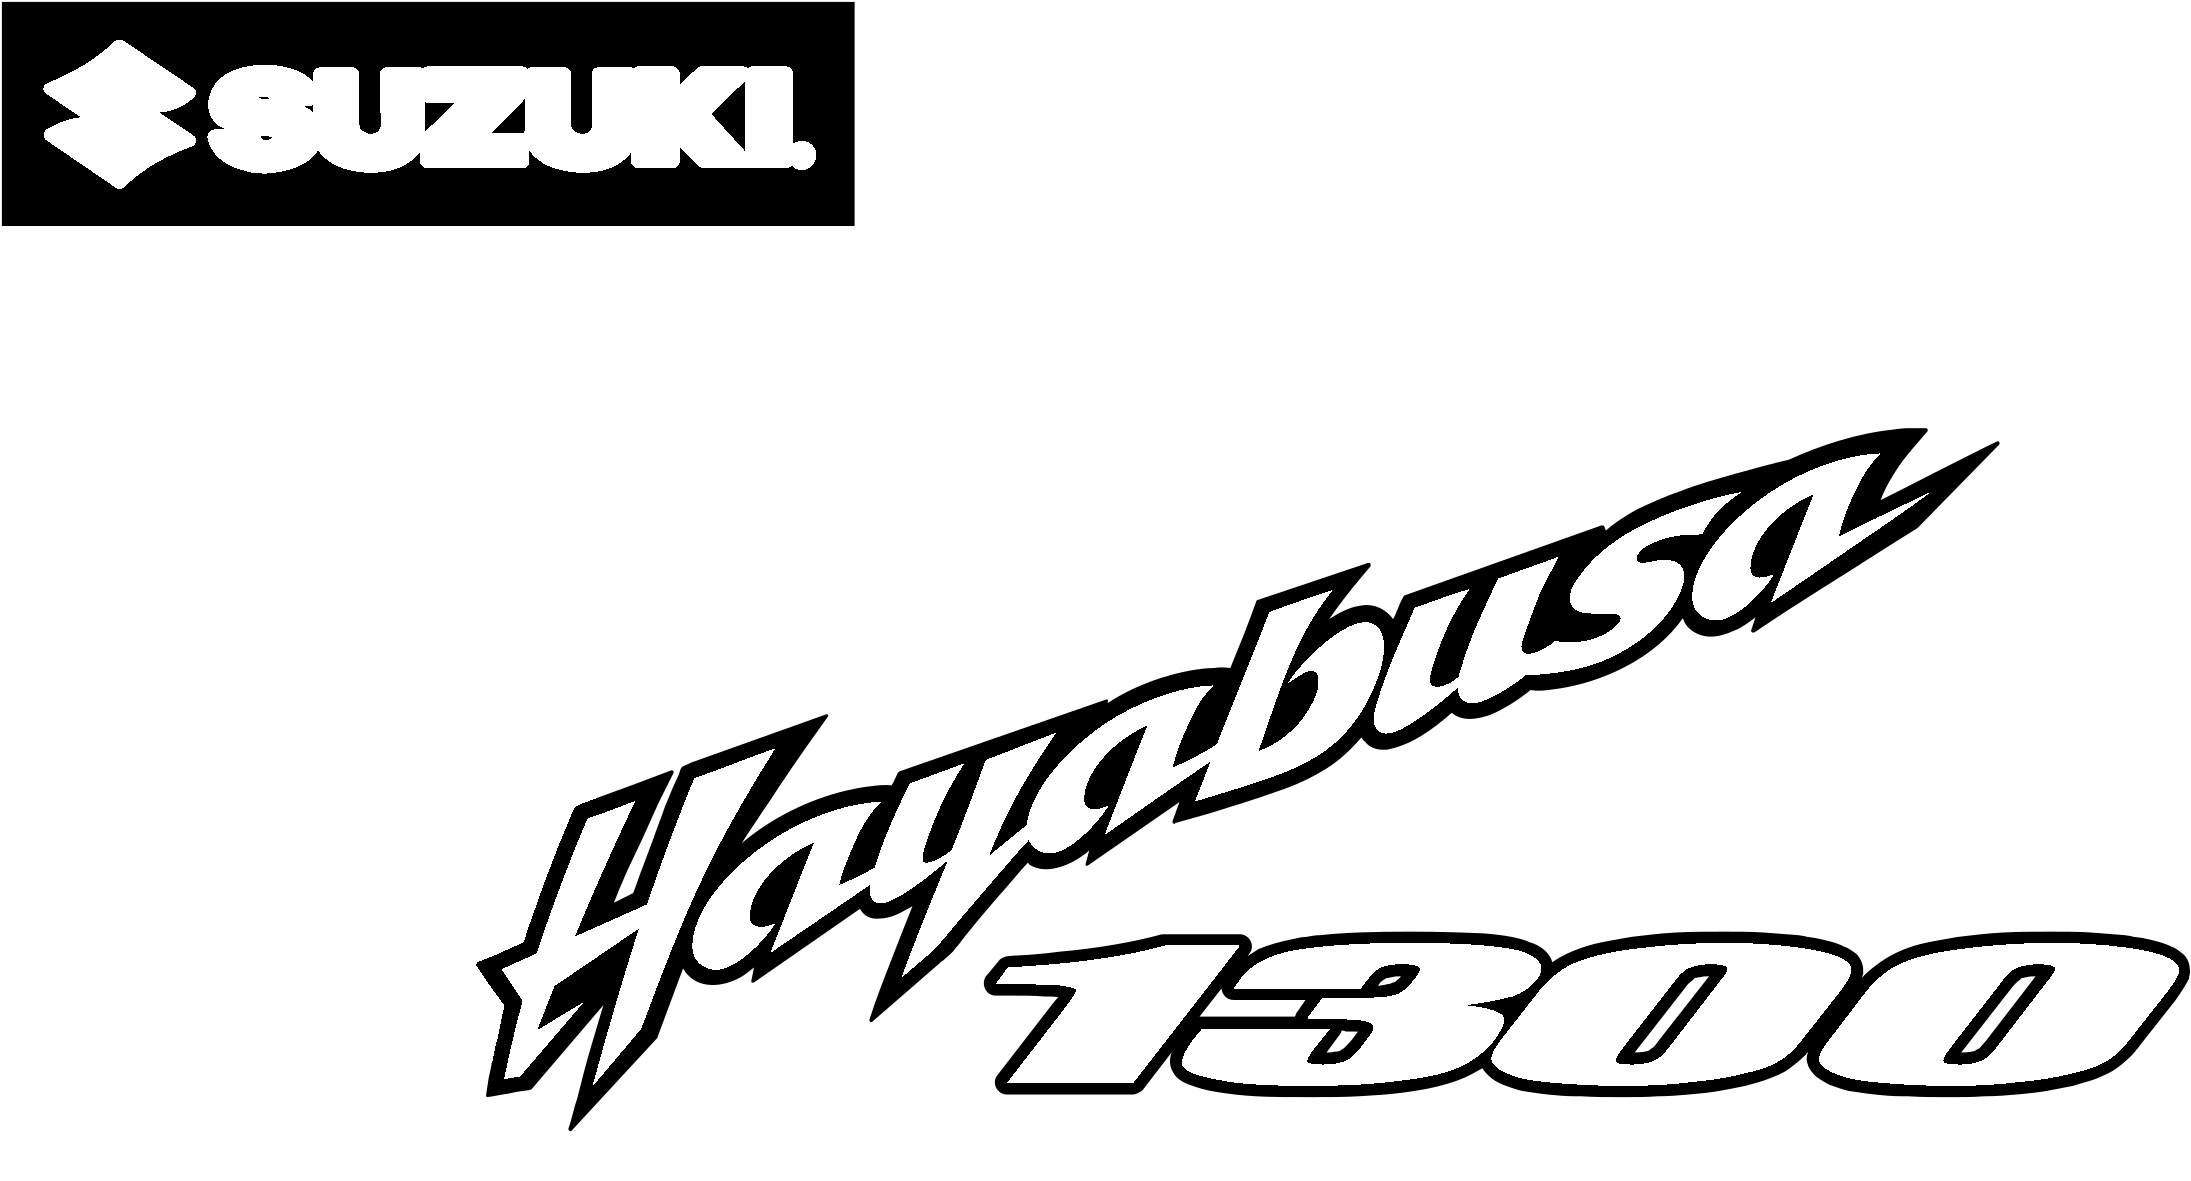 Suzuki Hayabusa 1300 Logo Black And White - Suzuki Hayabusa (2400x2400), Png Download